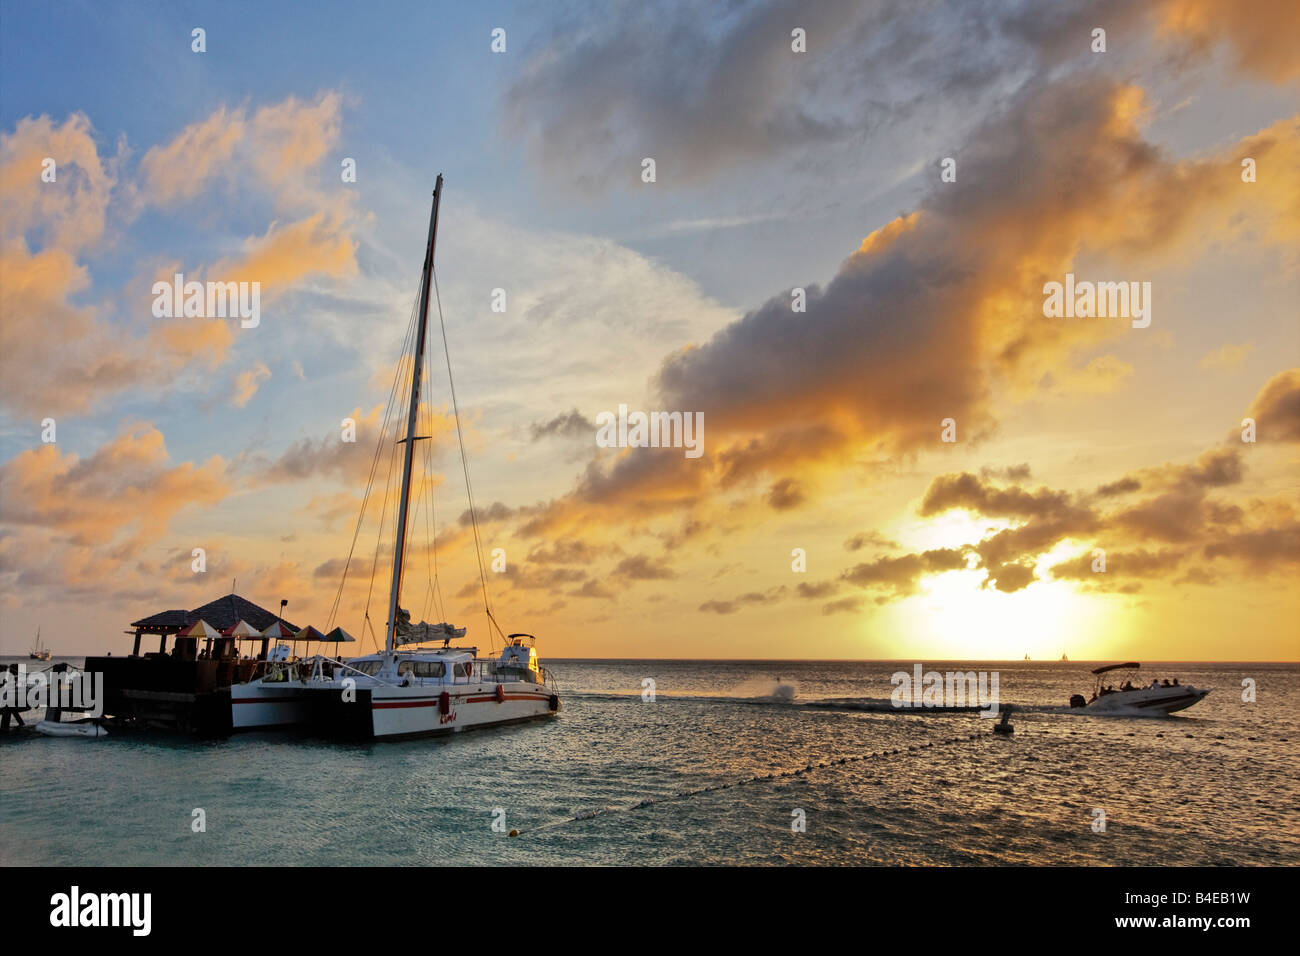 Aruba Palm Beach sunset Antille Olandesi Caraibi America Centrale Foto Stock